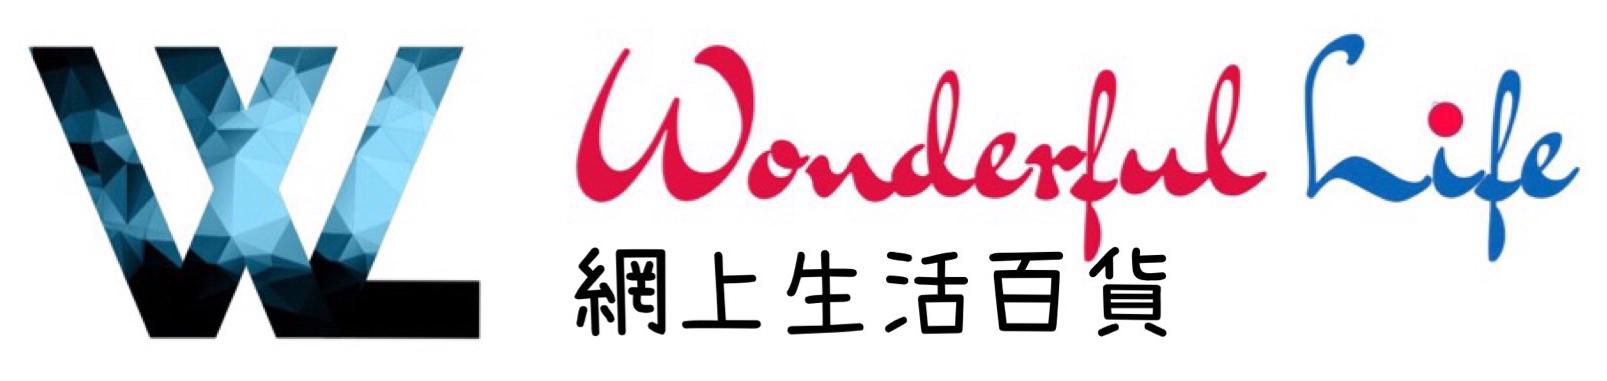 Mywonderful-life - 網上生活百貨